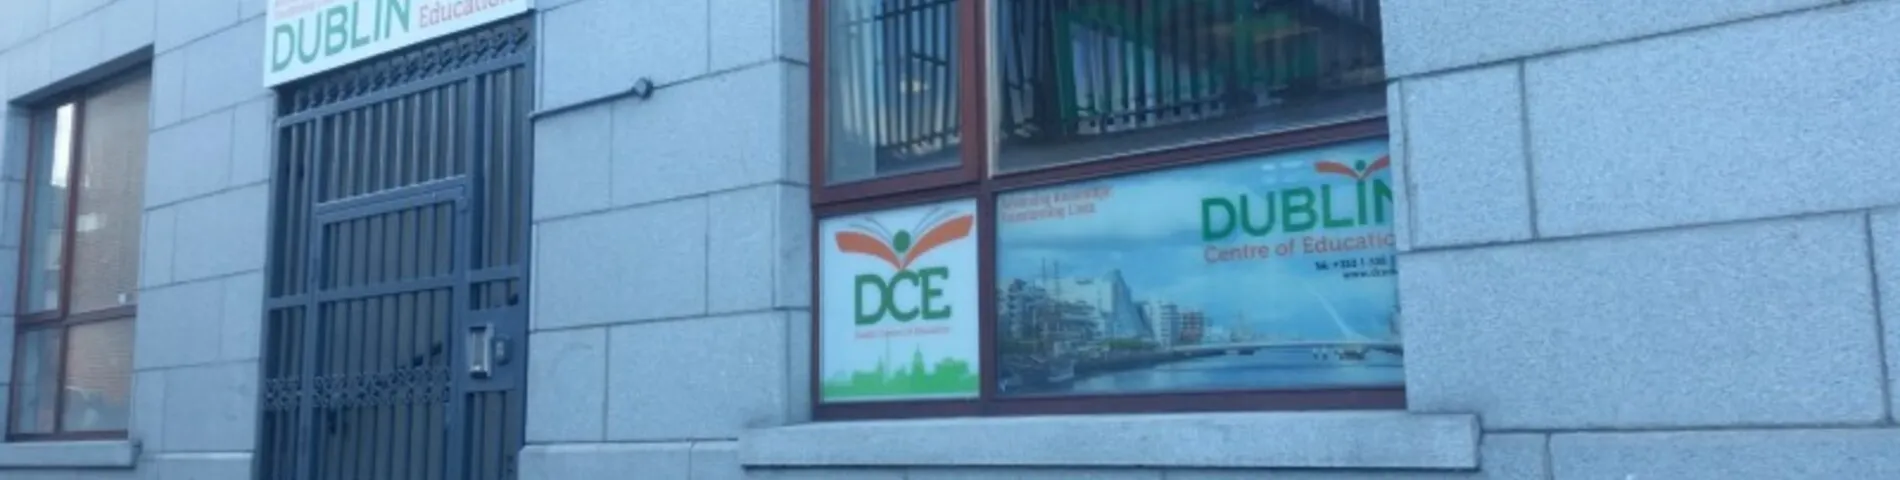 Dublin Centre of Education obrazek 1